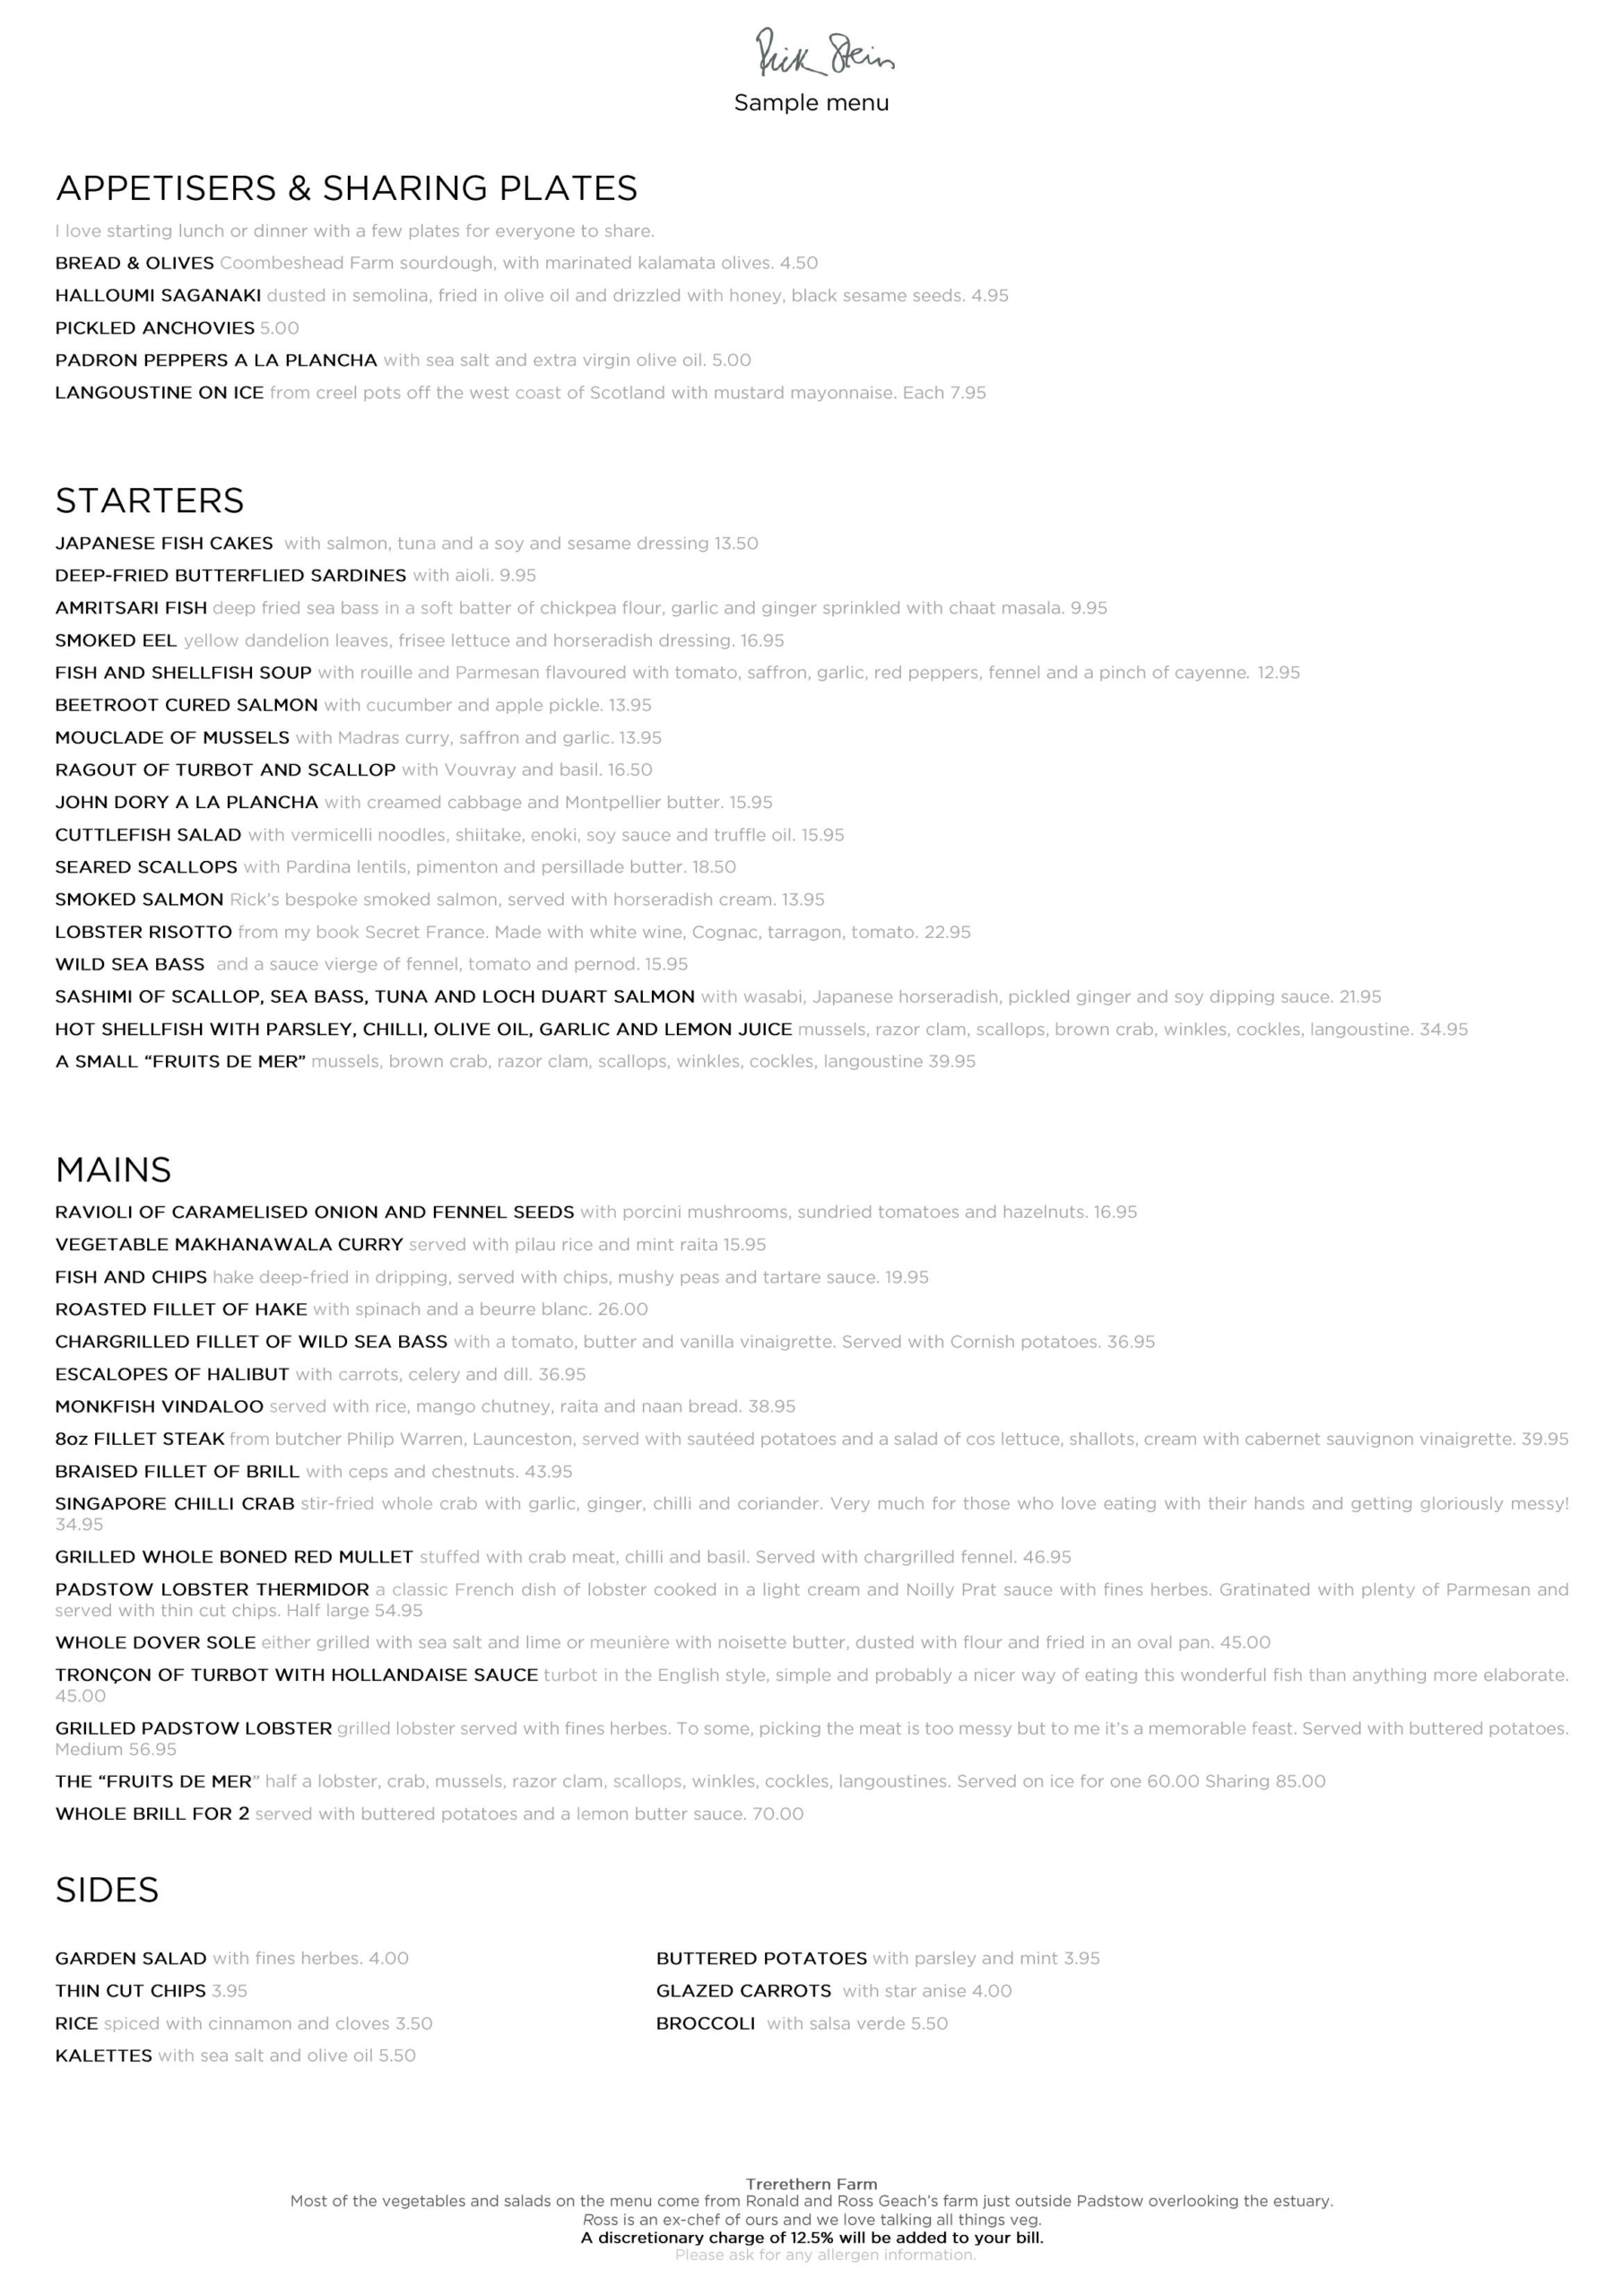 The Seafood Restaurant - main menu